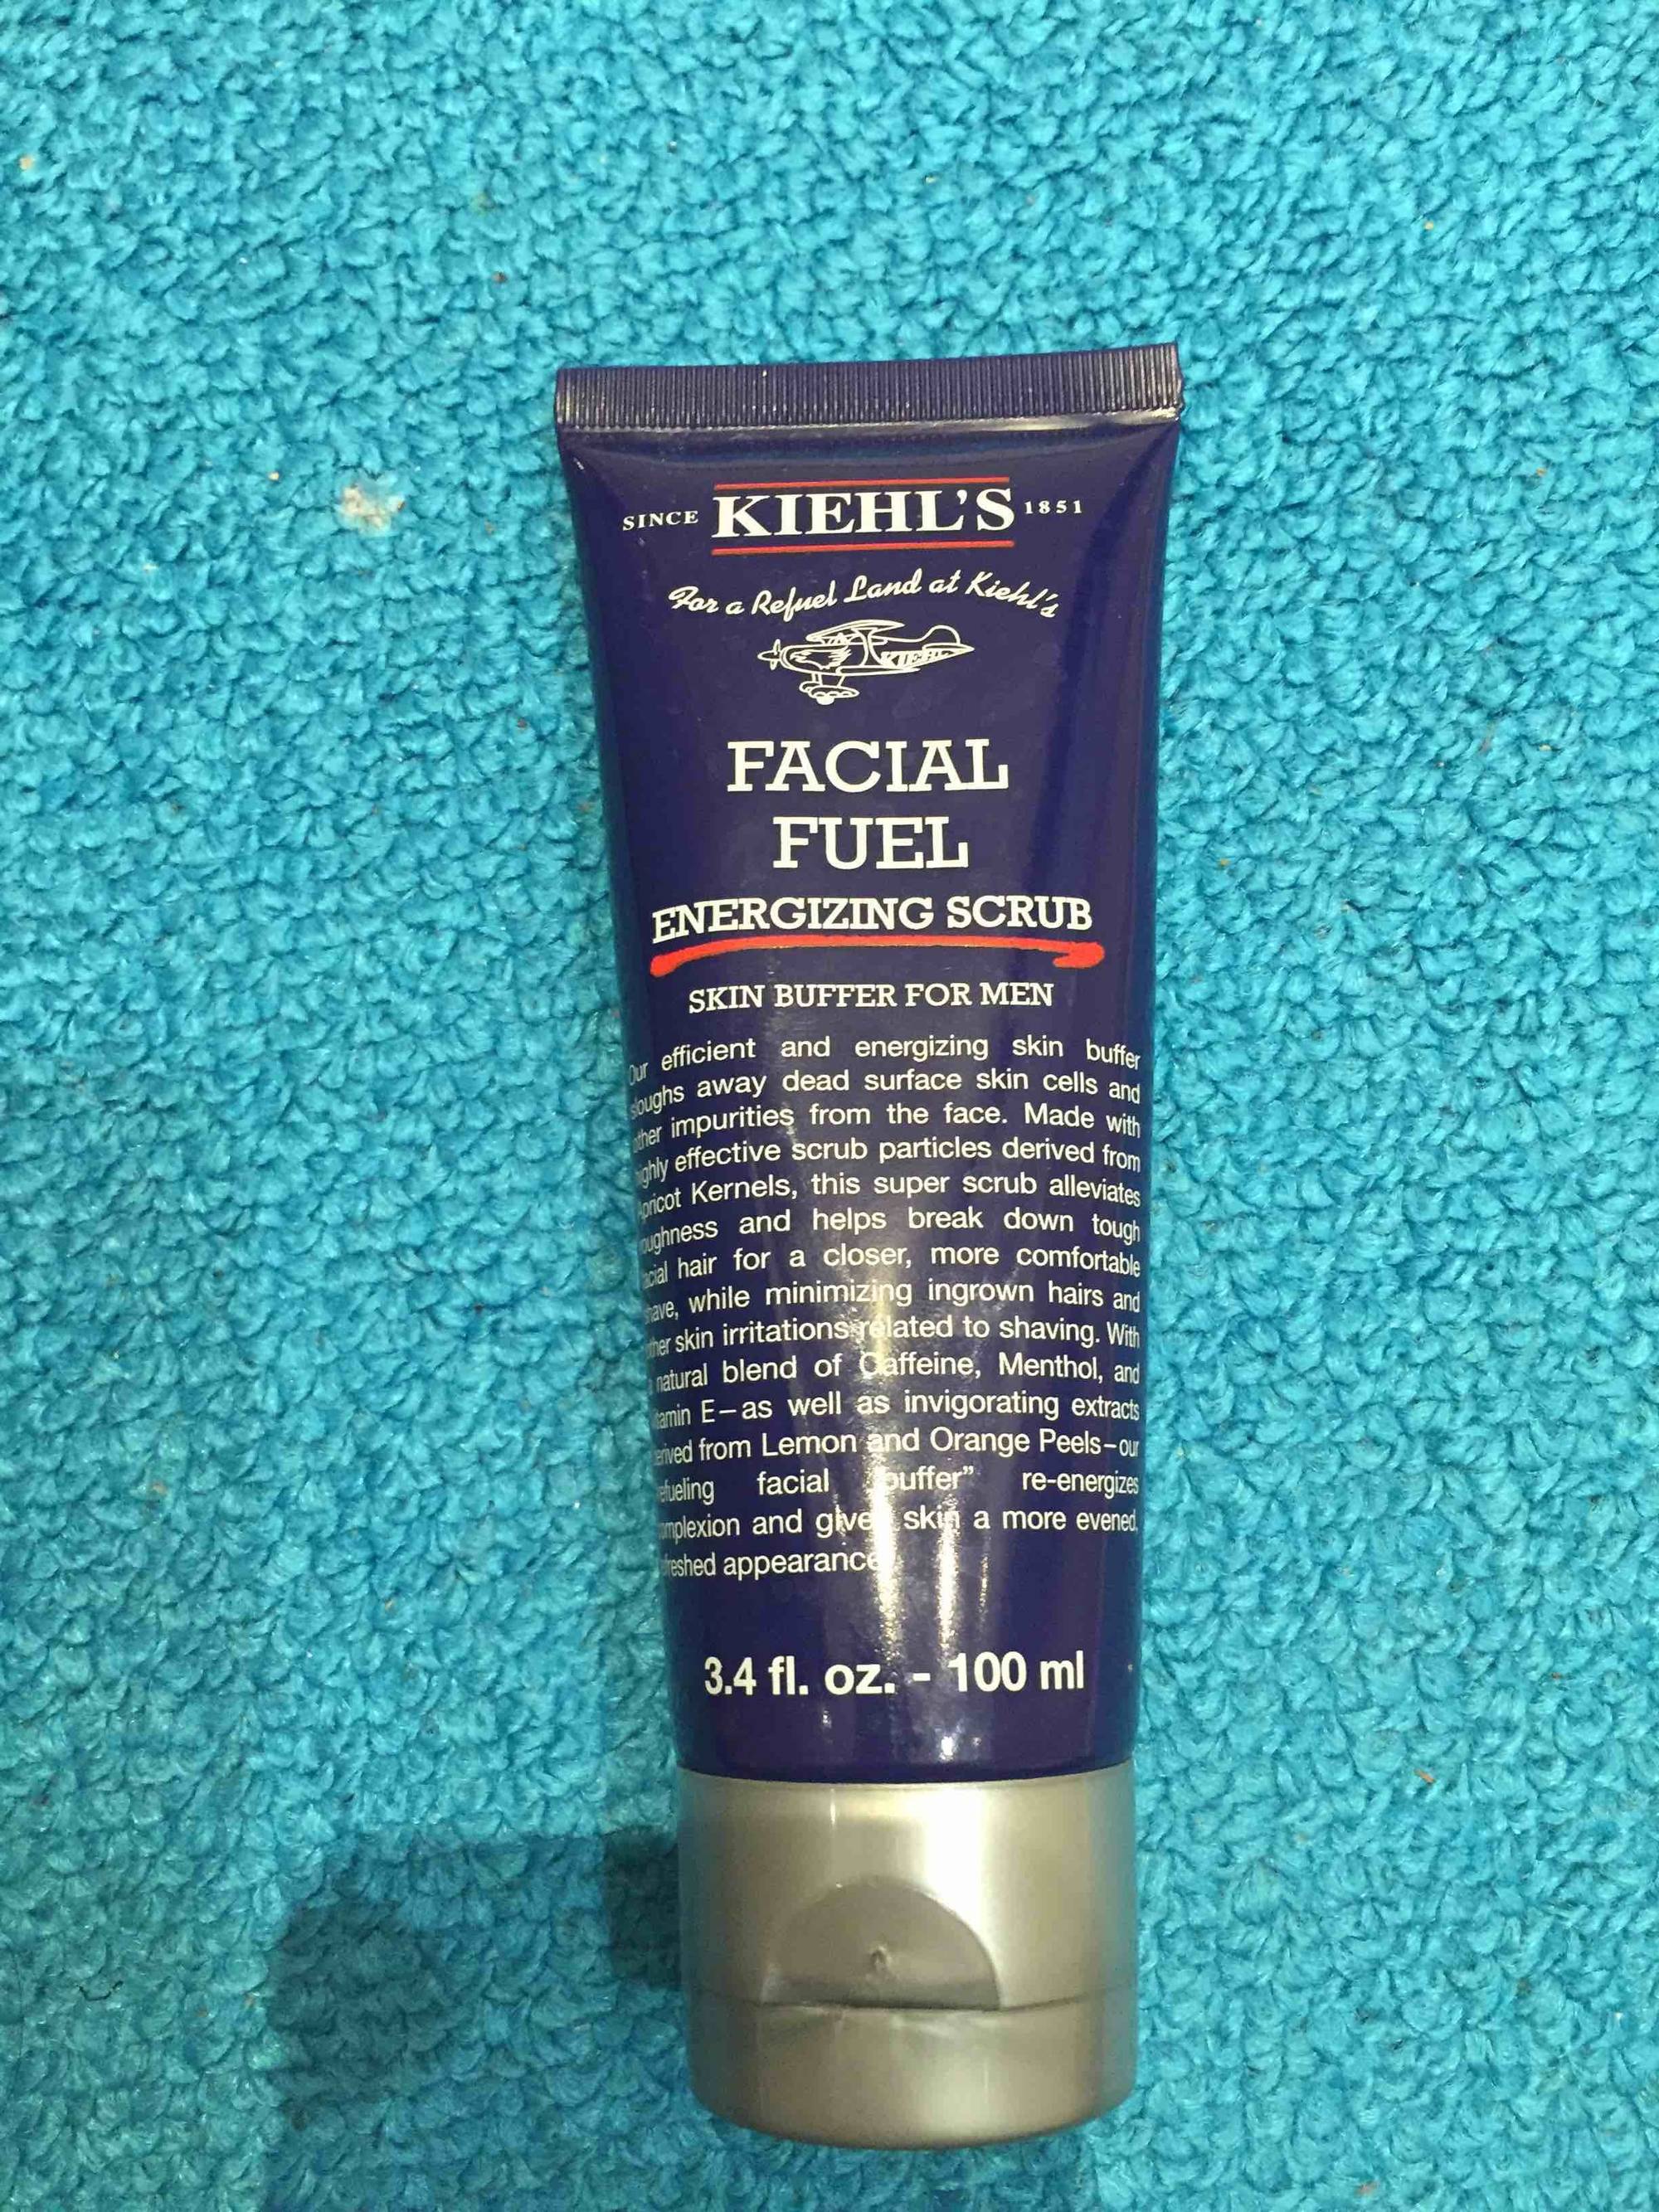 KIEHL'S - Facial fuel - Energizing scrub